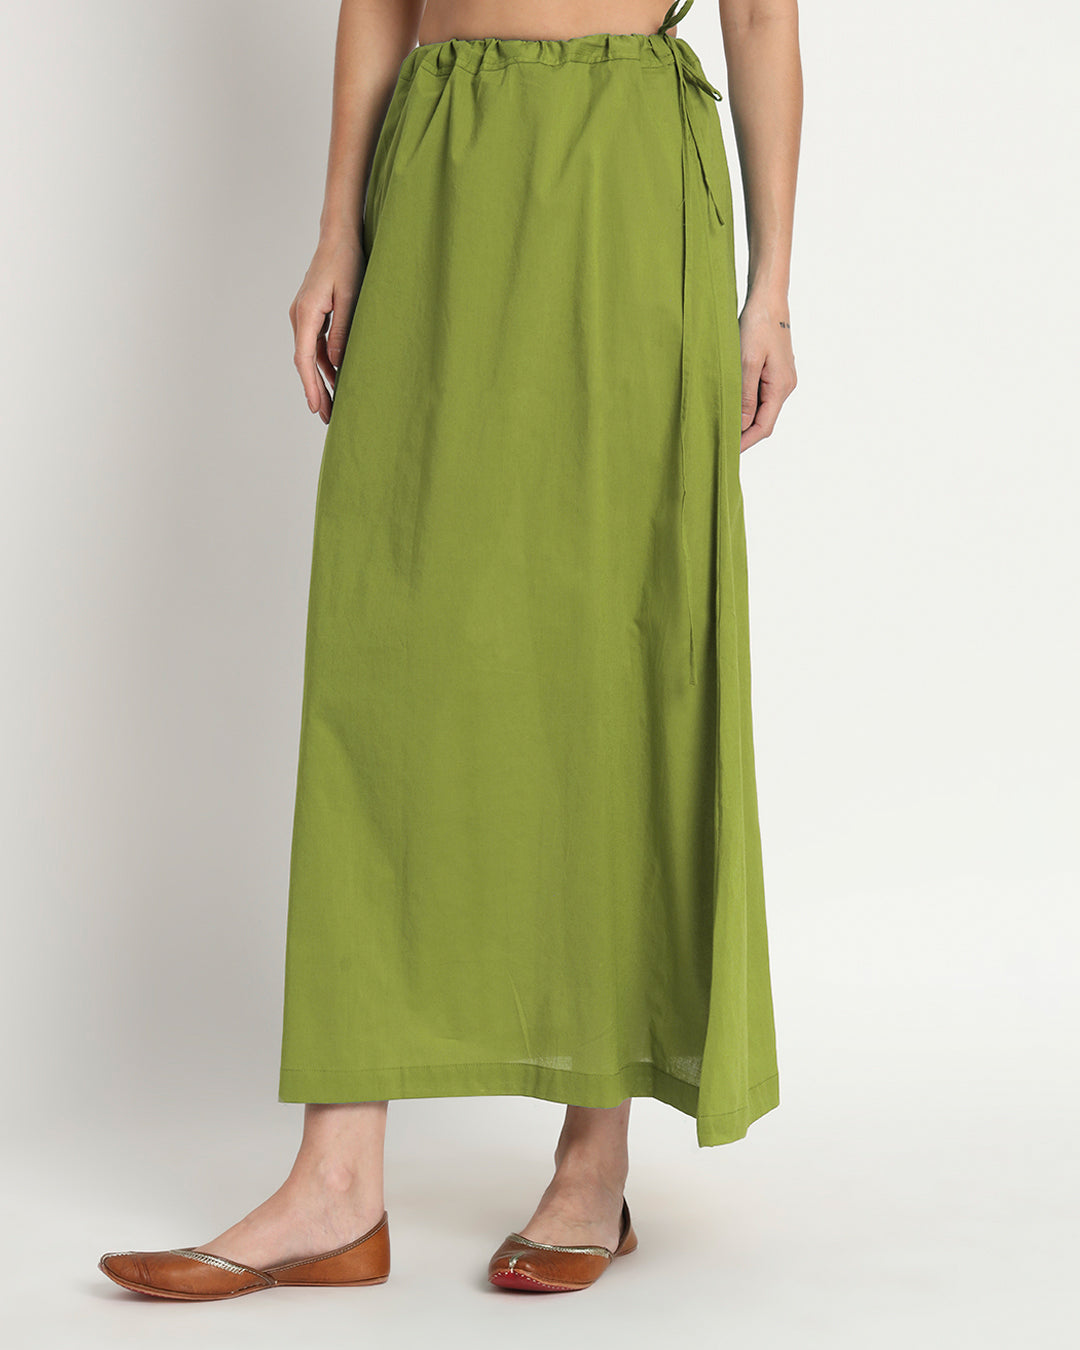 Combo: Black & Sage Green Peekaboo Petticoat- Set of 2